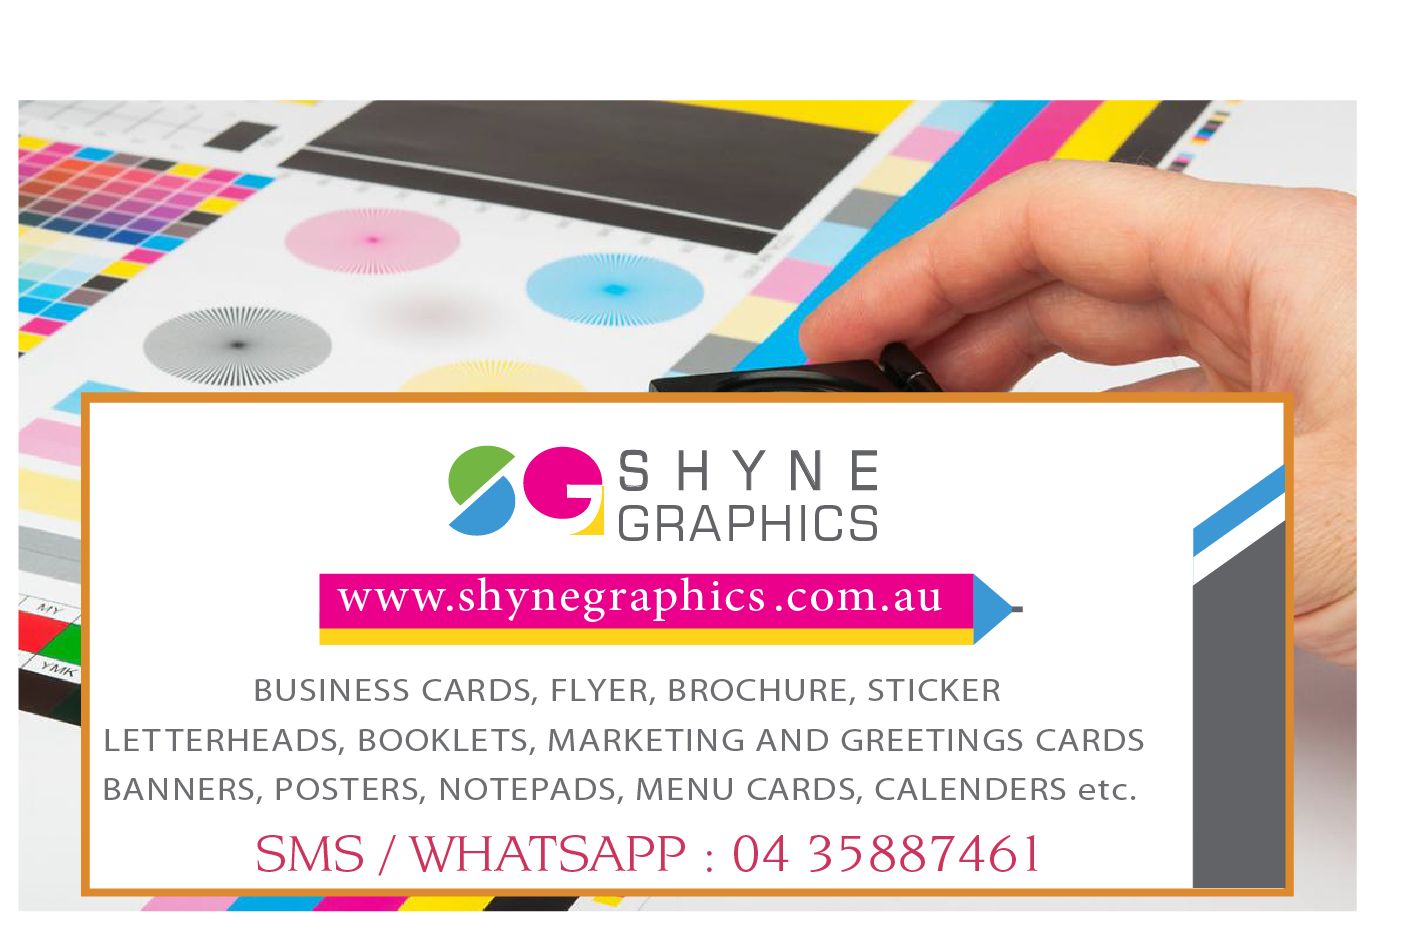 SHYNE GRAPHICS – Digital printing service